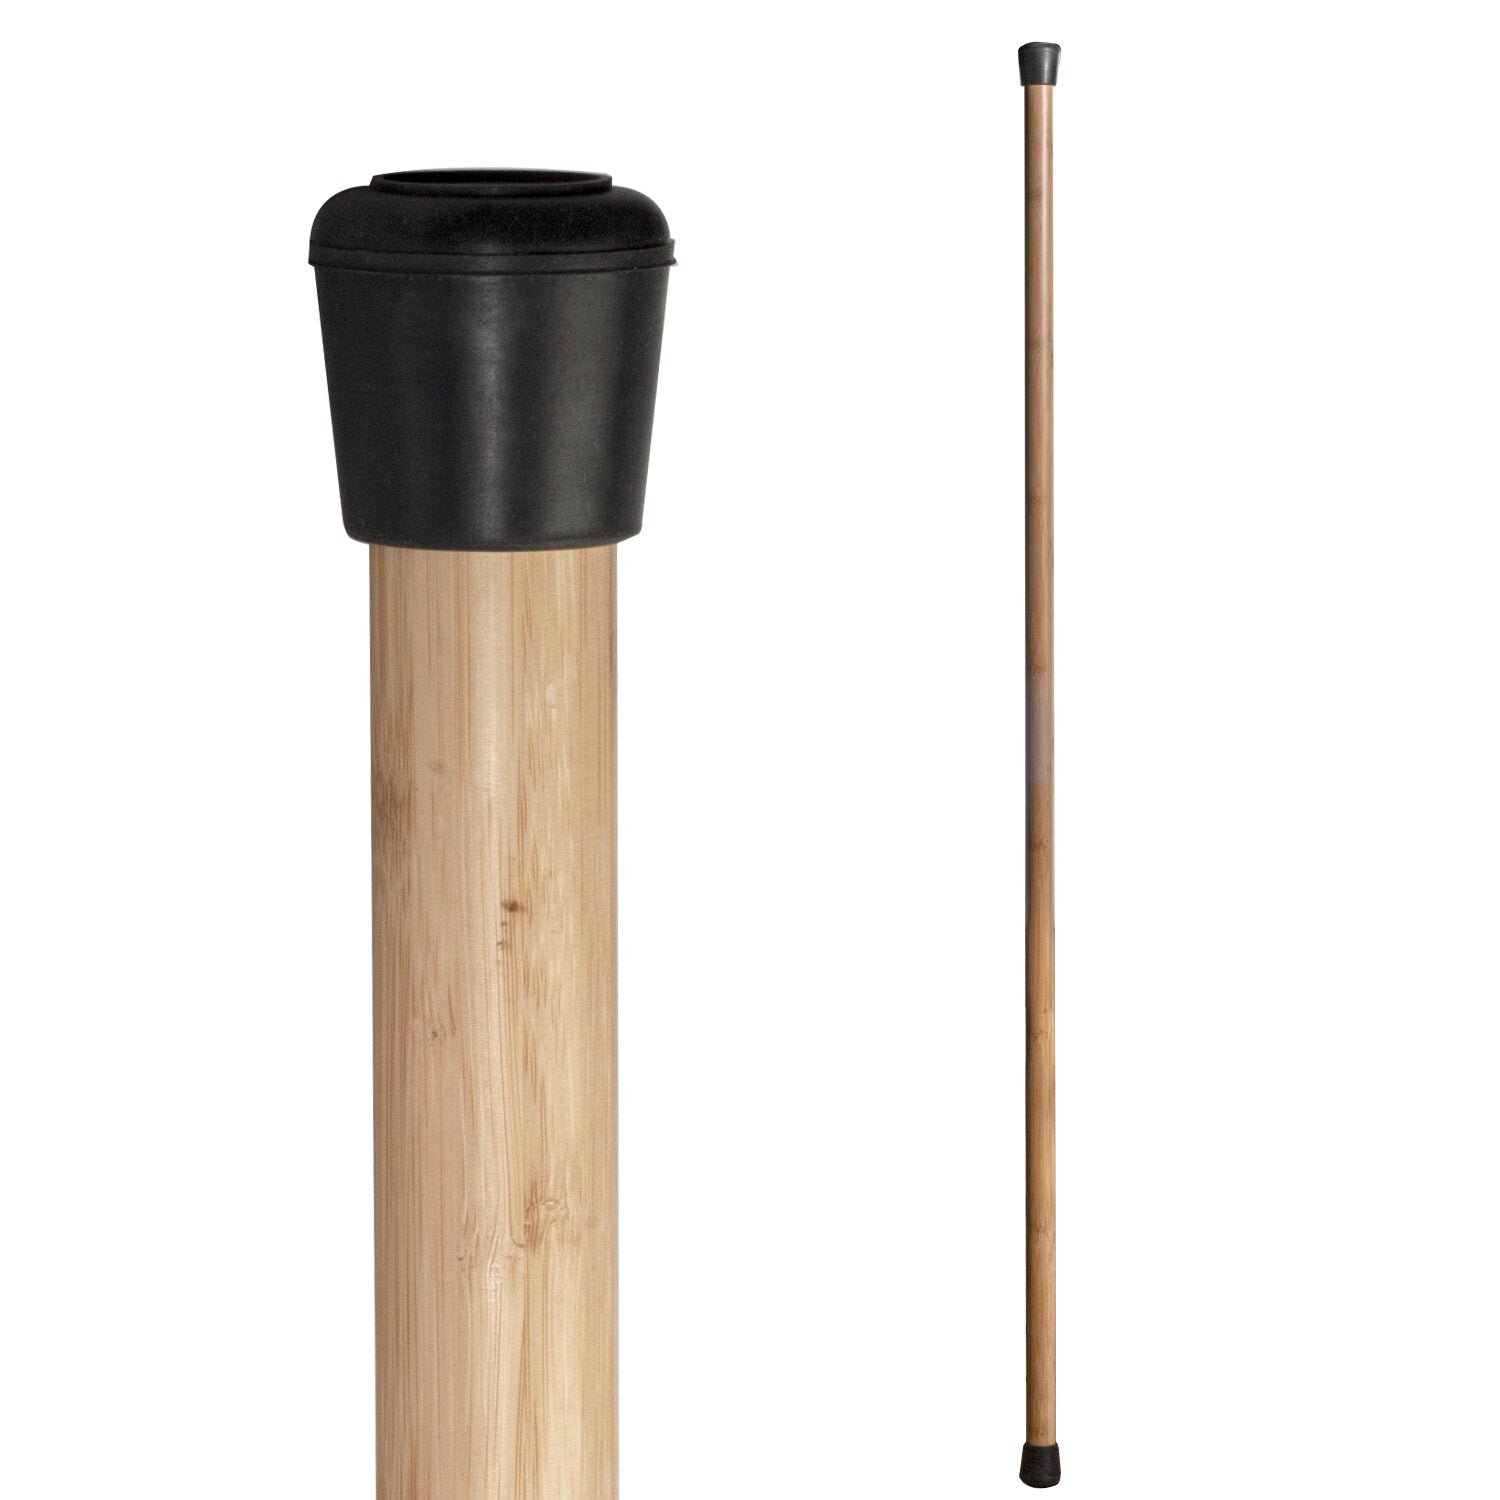 Bamboo Stick for Walking, Balance, Strength Training & Stretching -  MobilevisionUS